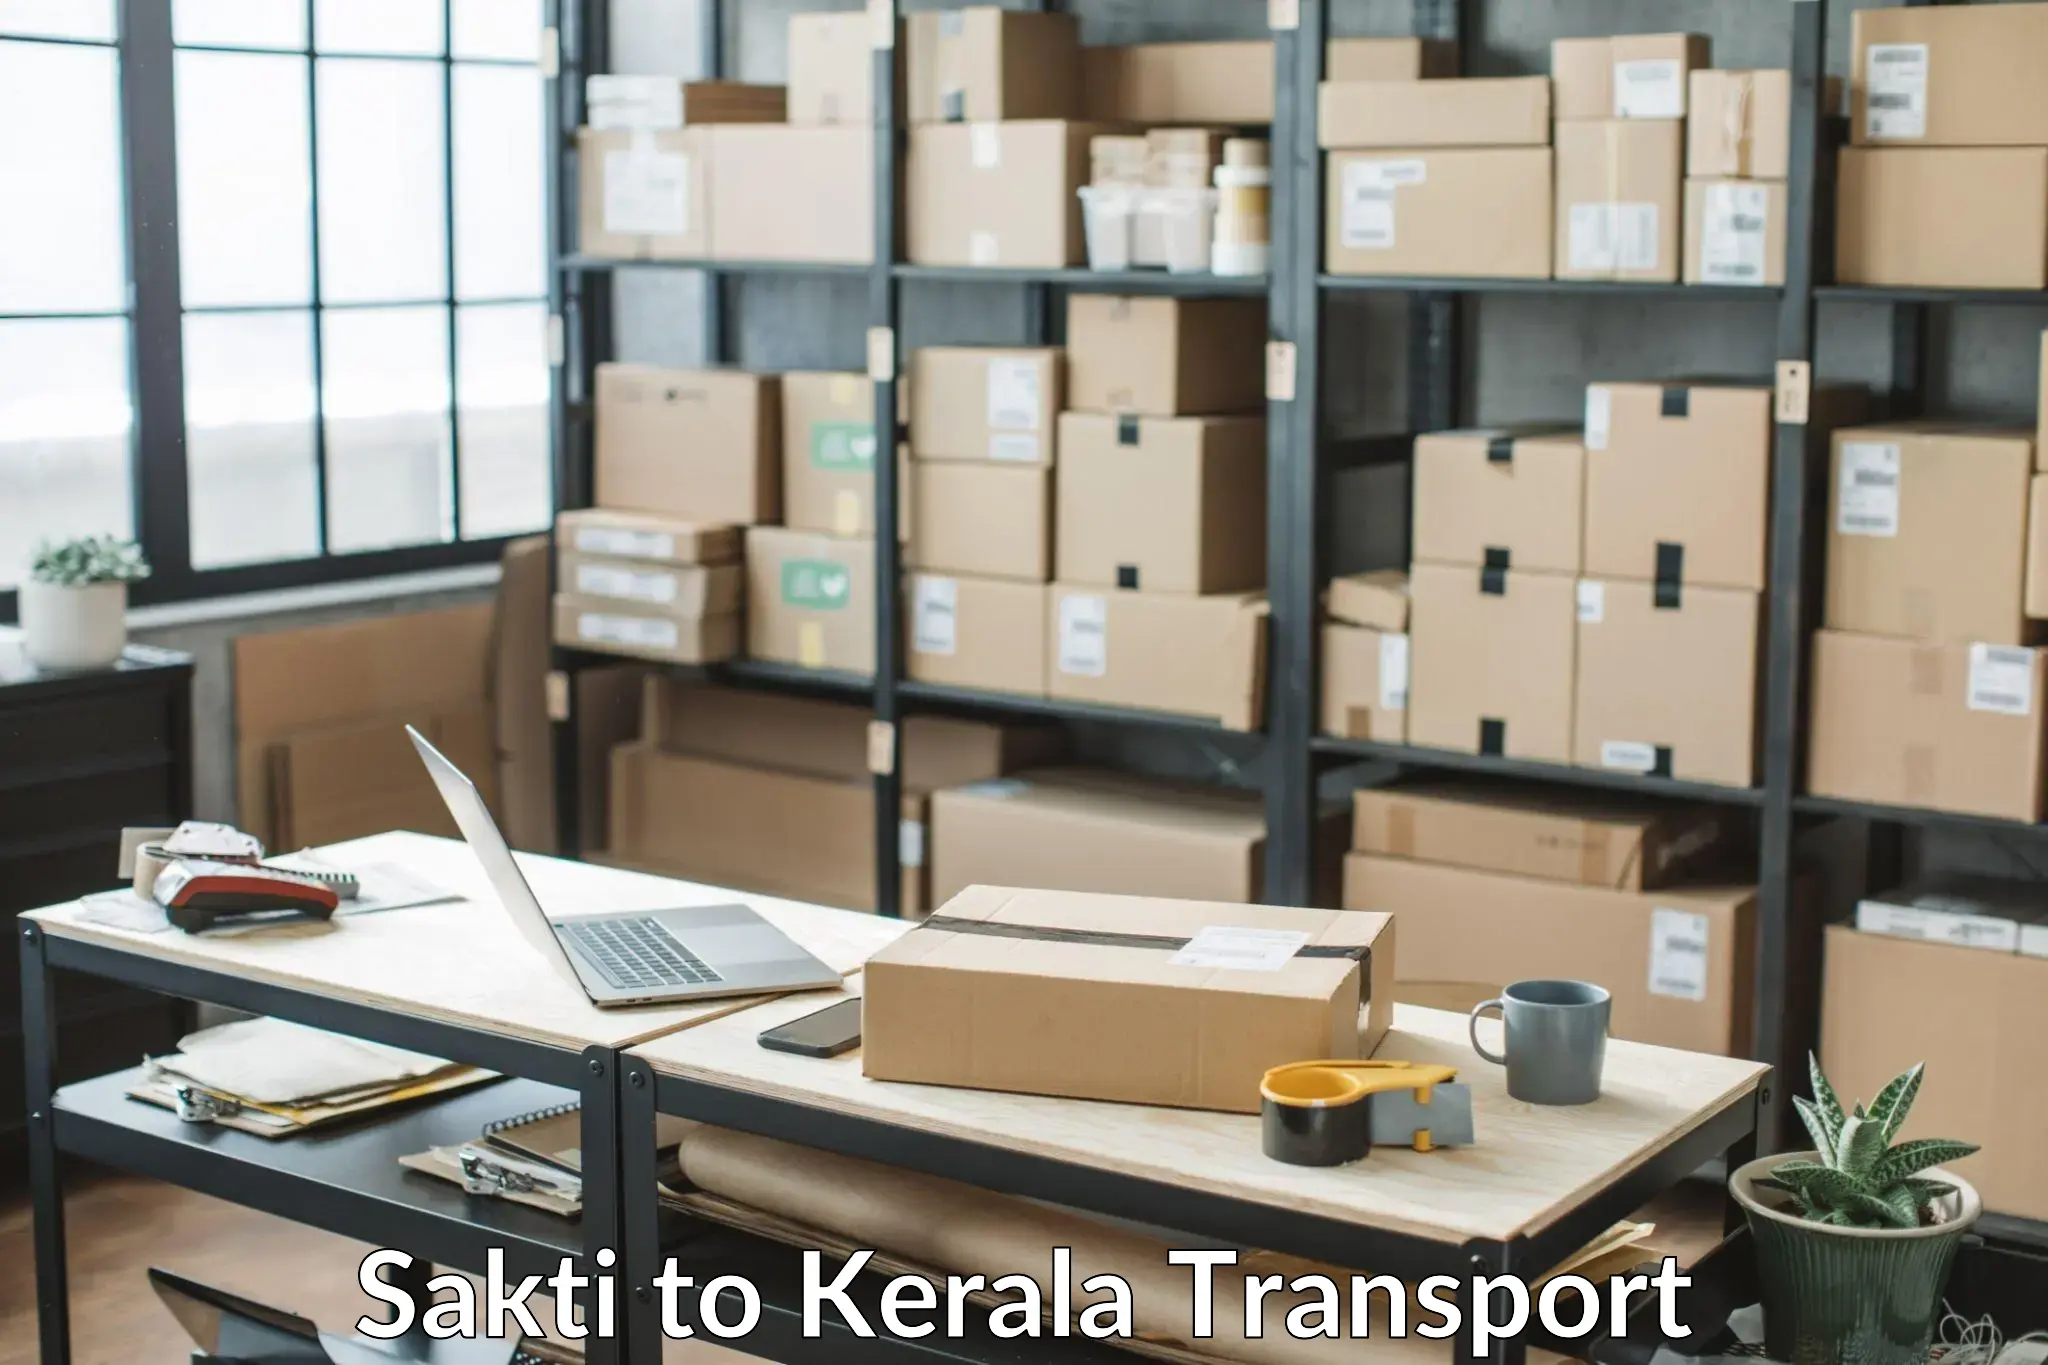 Delivery service Sakti to Kerala